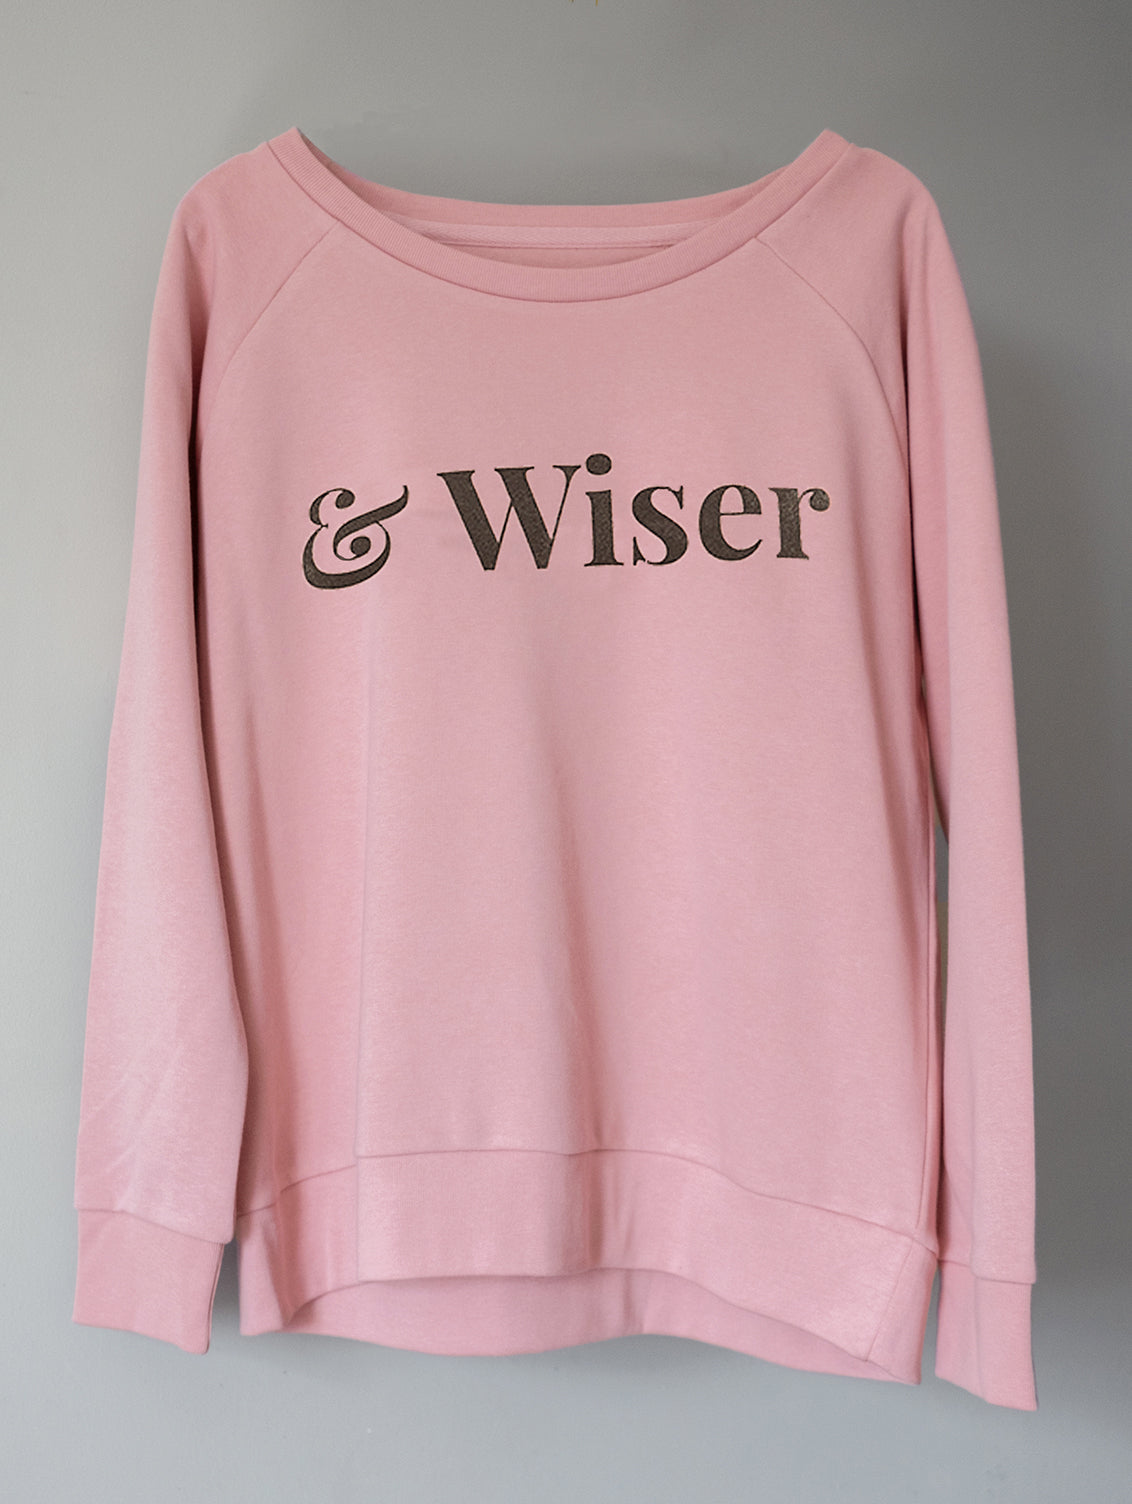 & Wiser sweatshirt dusty pink TNMA